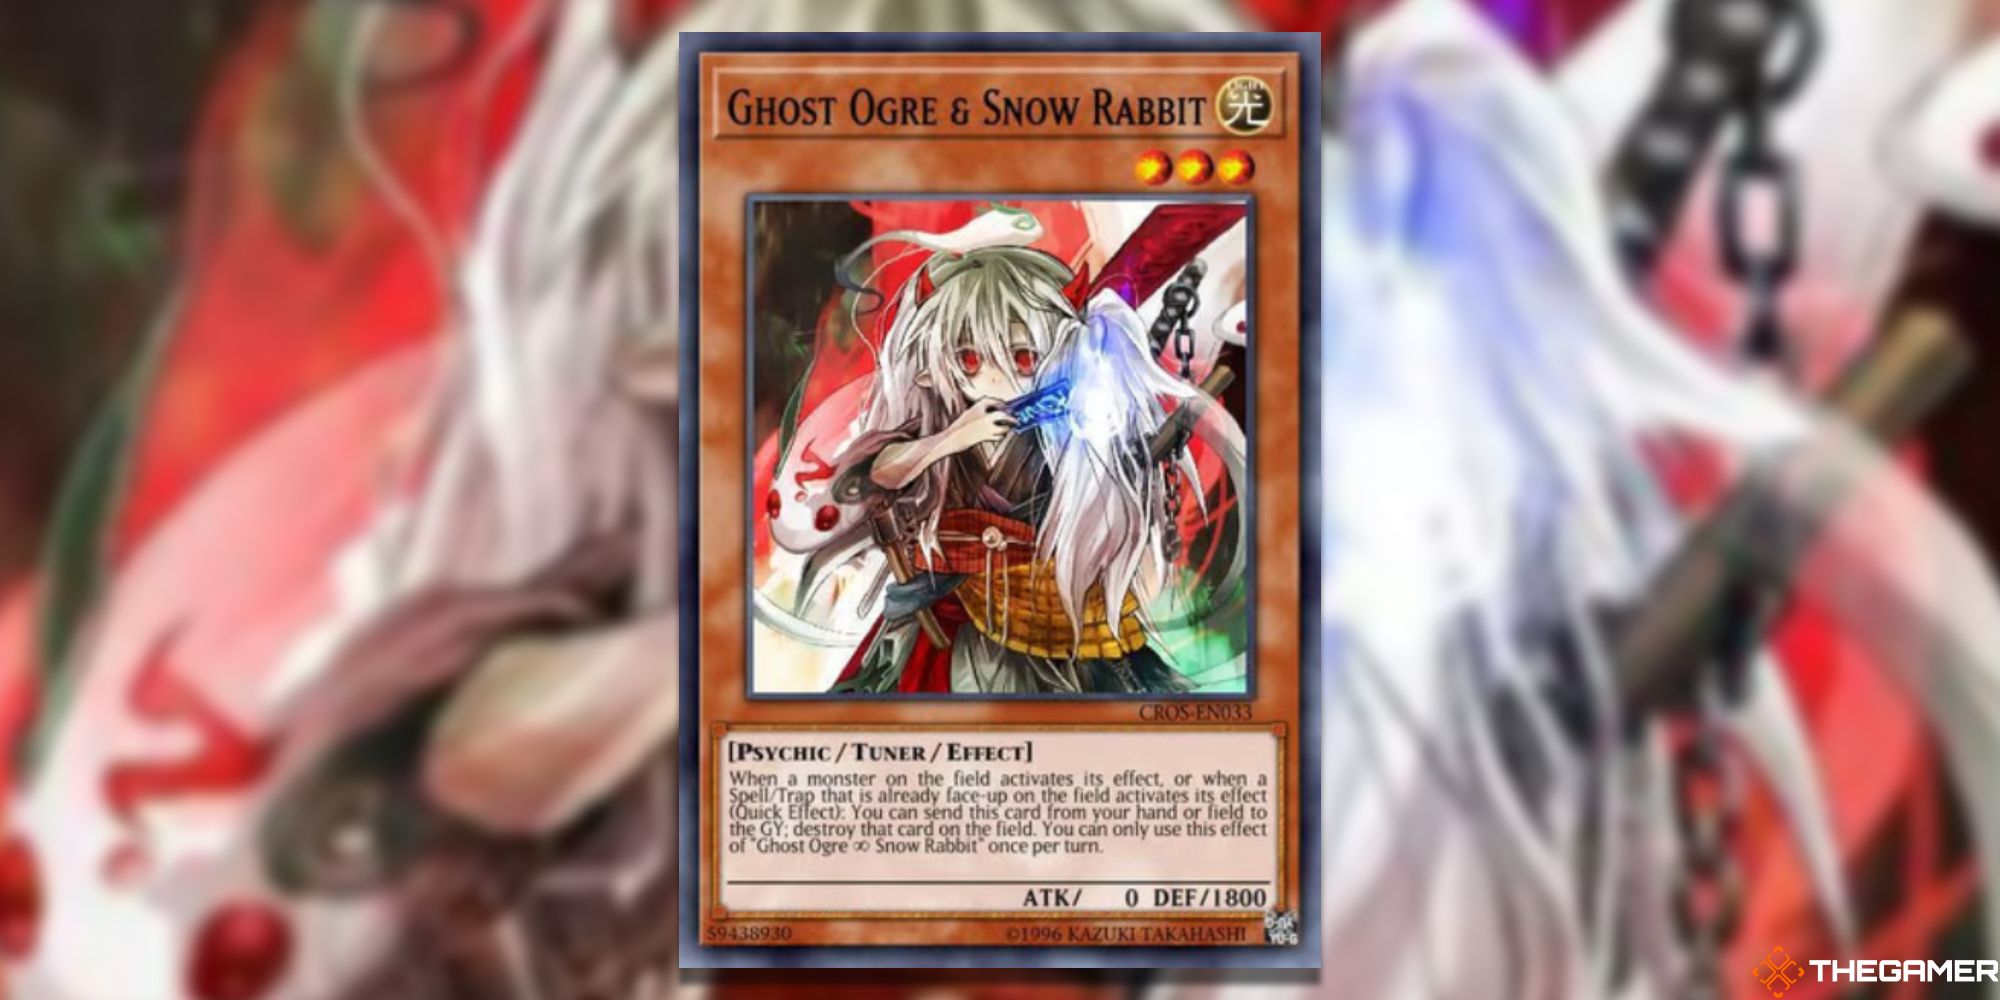 Yu-Gi-Oh! Ghost Ogre & Snow Rabbit on blurred background